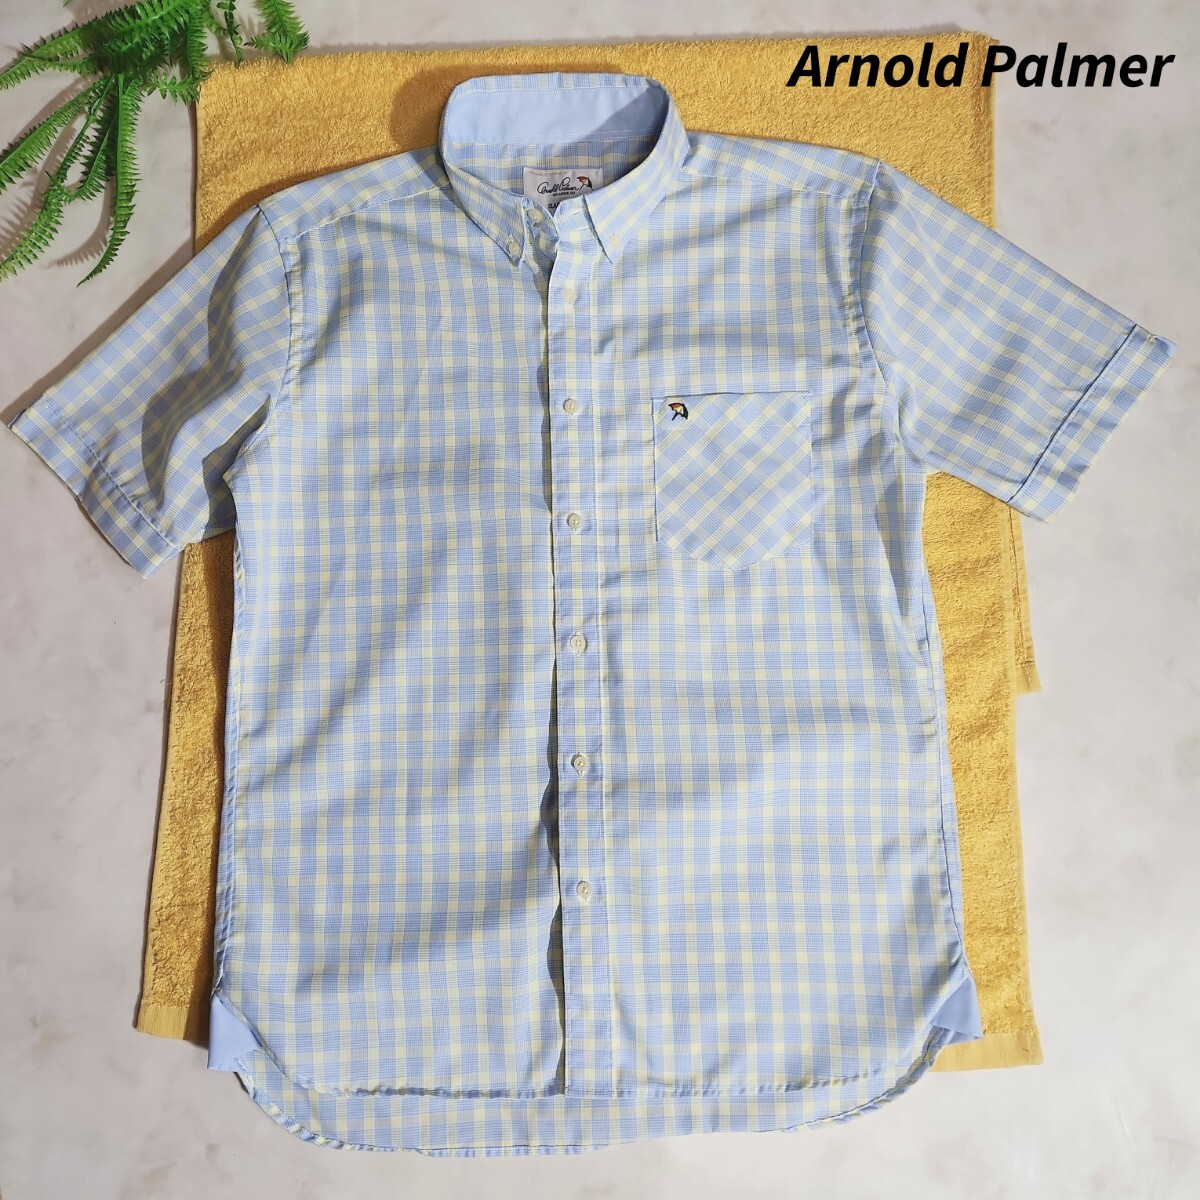 Arnold Palmer チェック柄・半袖BDシャツ 表記サイズ3 L ライトイエロー白ライトブルー・レナウン・アーノルドパーマー 83371